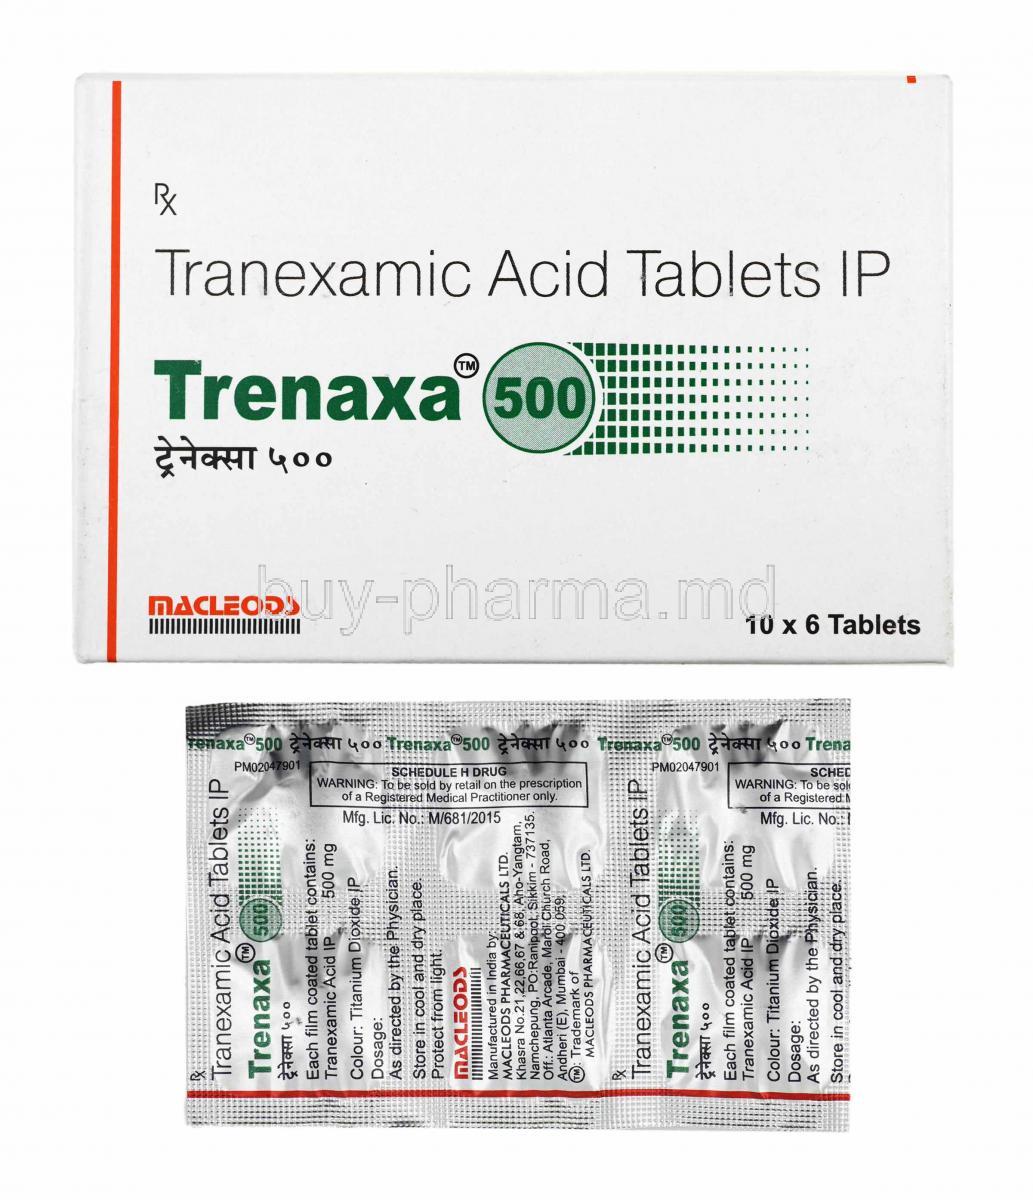 Trenaxa, Tranexamic Acid 500mg box and tablets